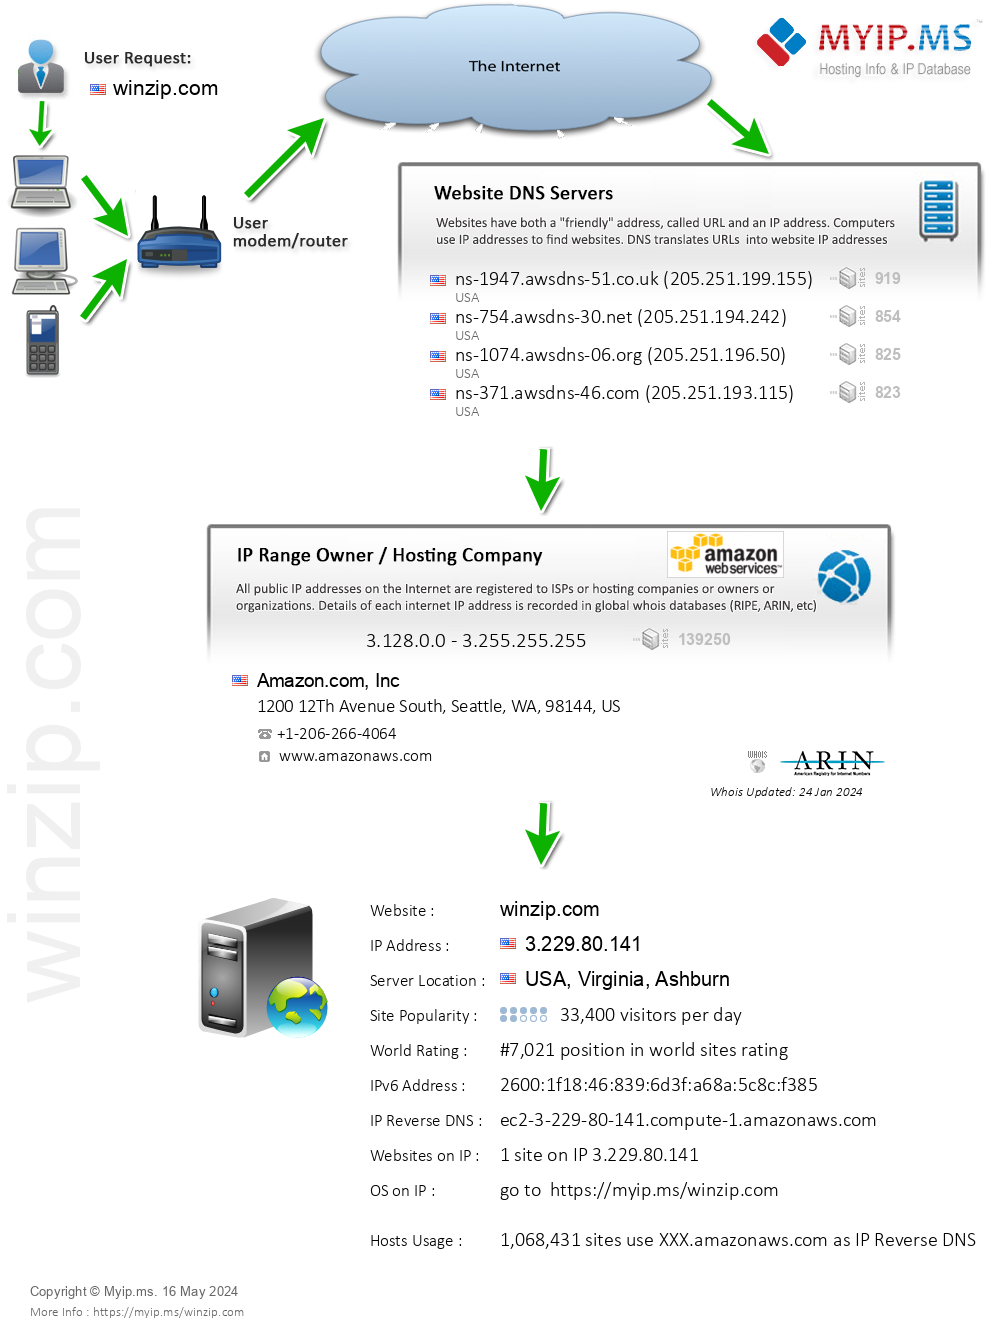 Winzip.com - Website Hosting Visual IP Diagram